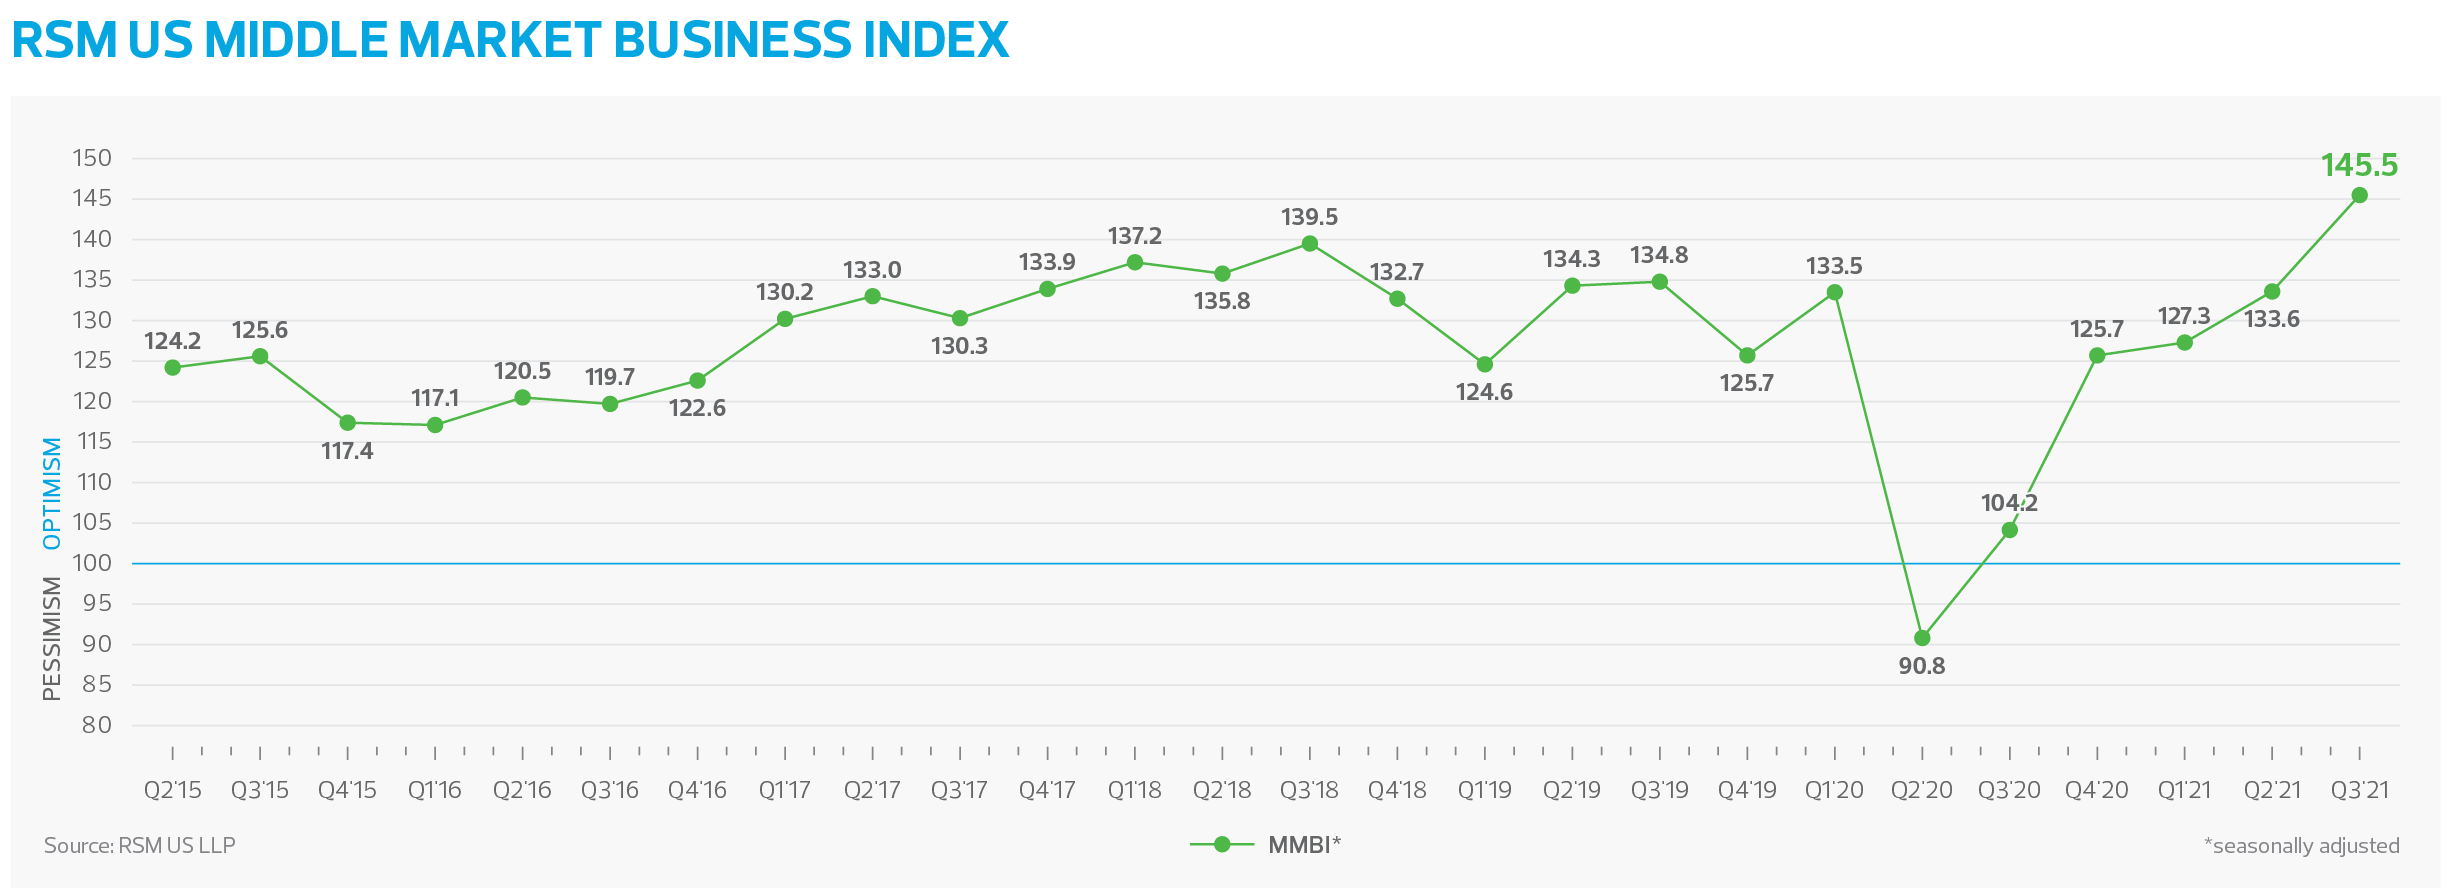 Line chart of RSM US Middle Market Business Index through Q3 2021